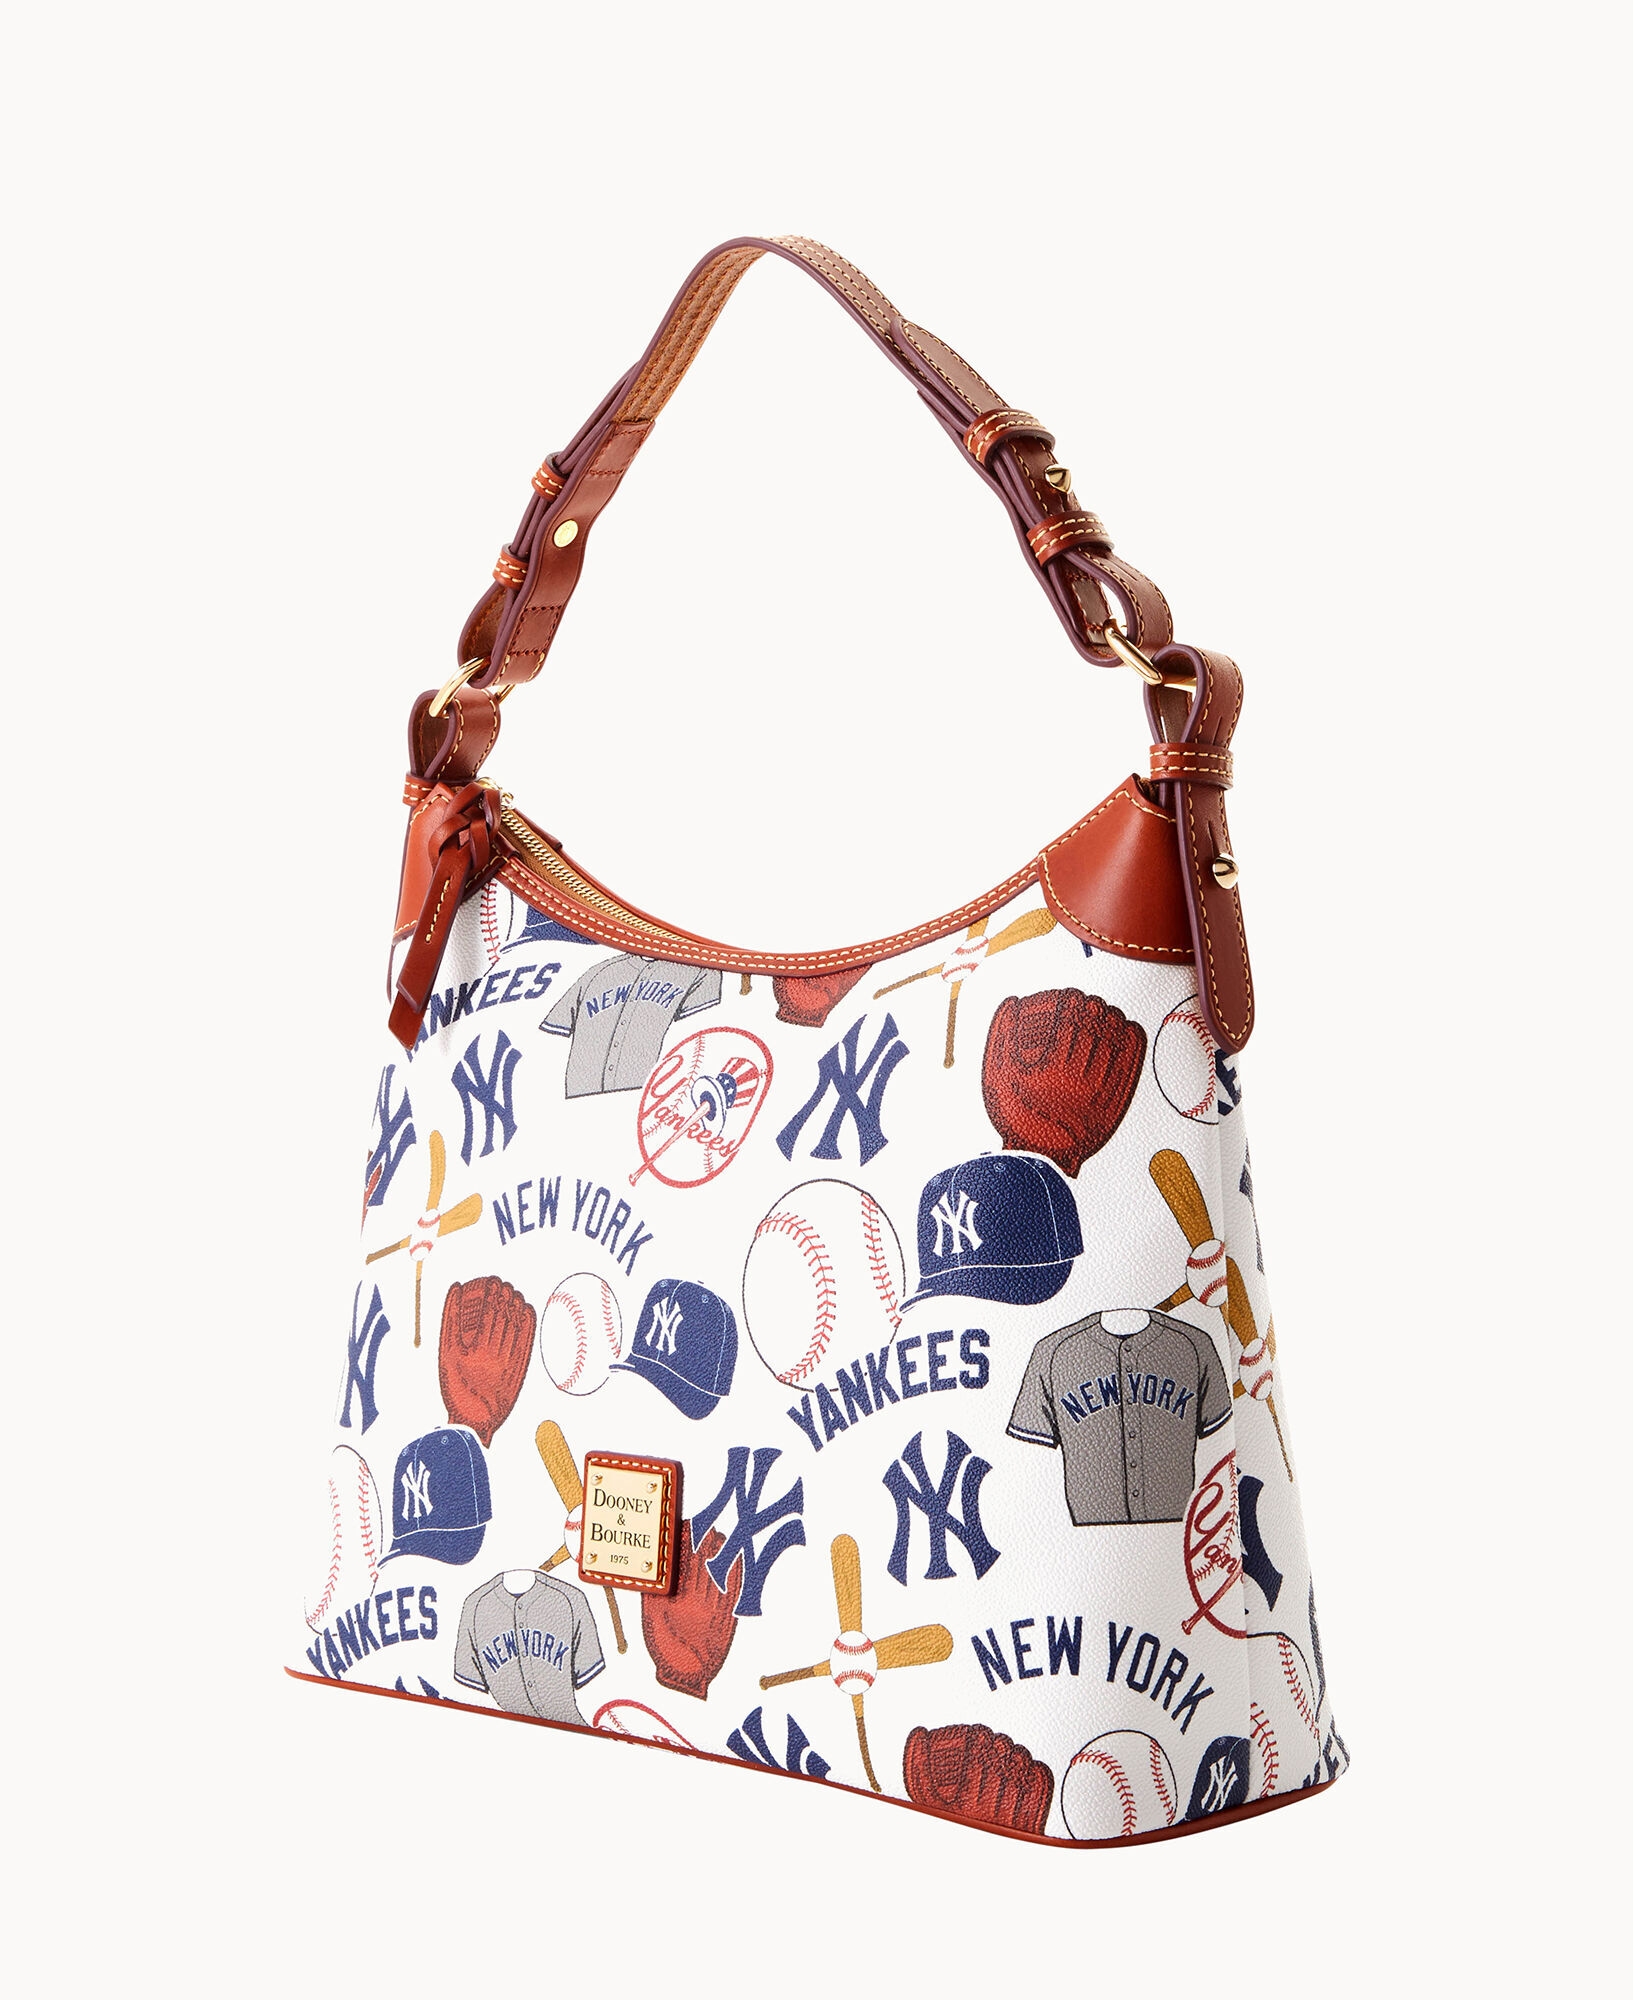 Dooney & Bourke New York Yankees Large Sac Shoulder Bag